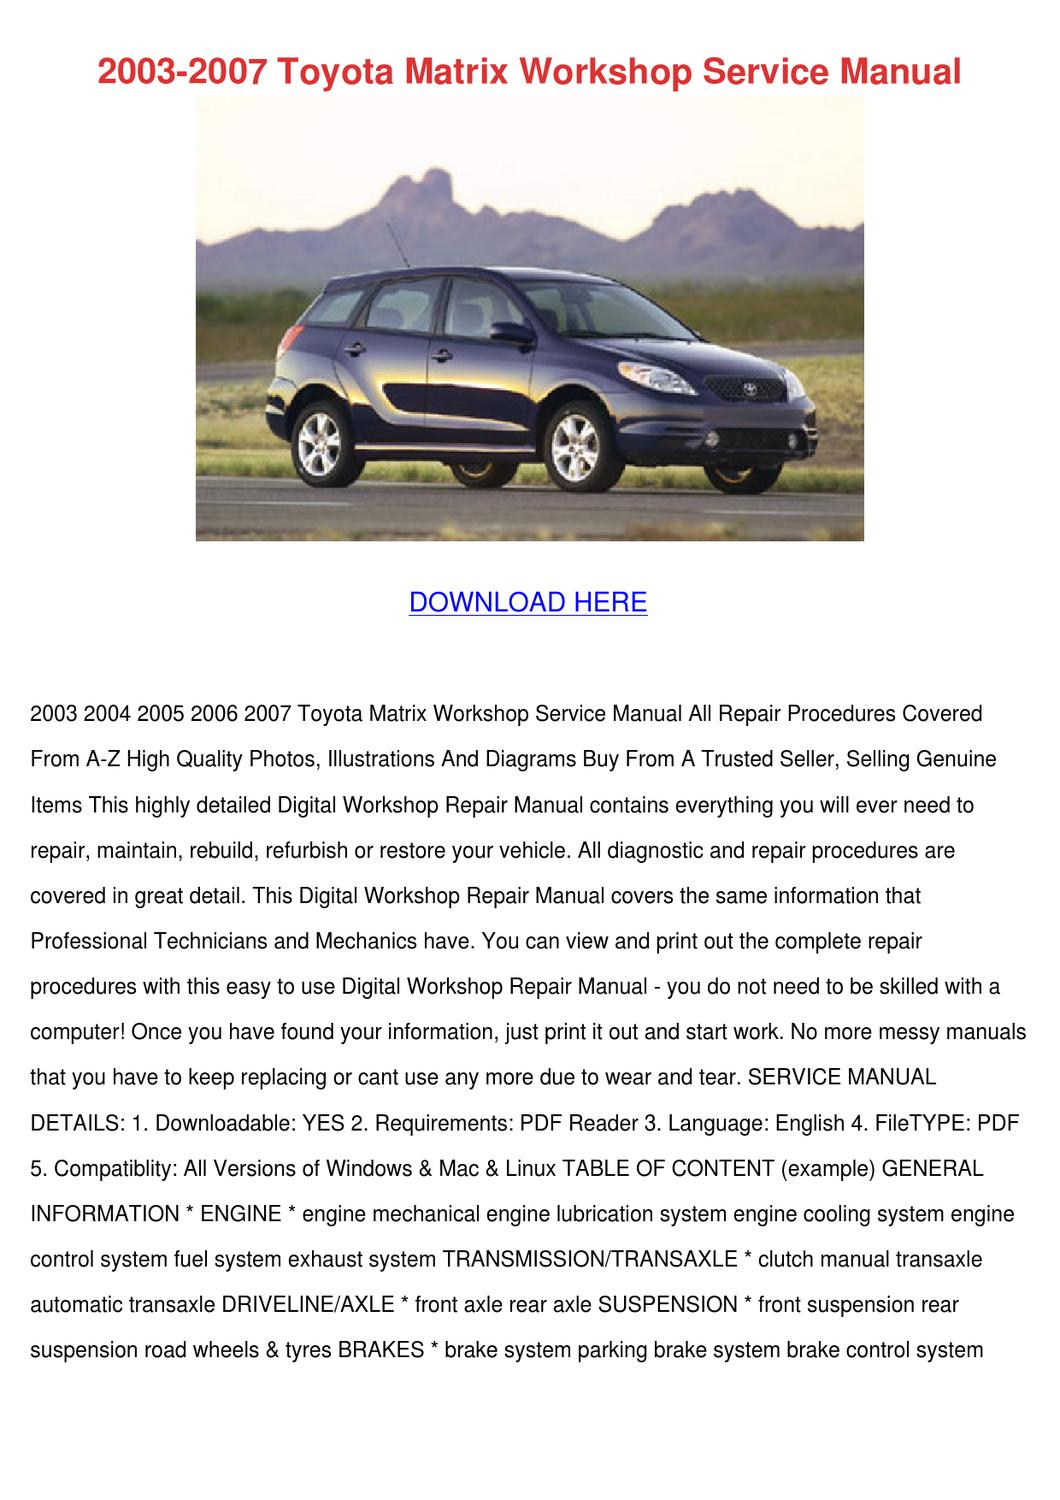 2006 toyota matrix owners manual download